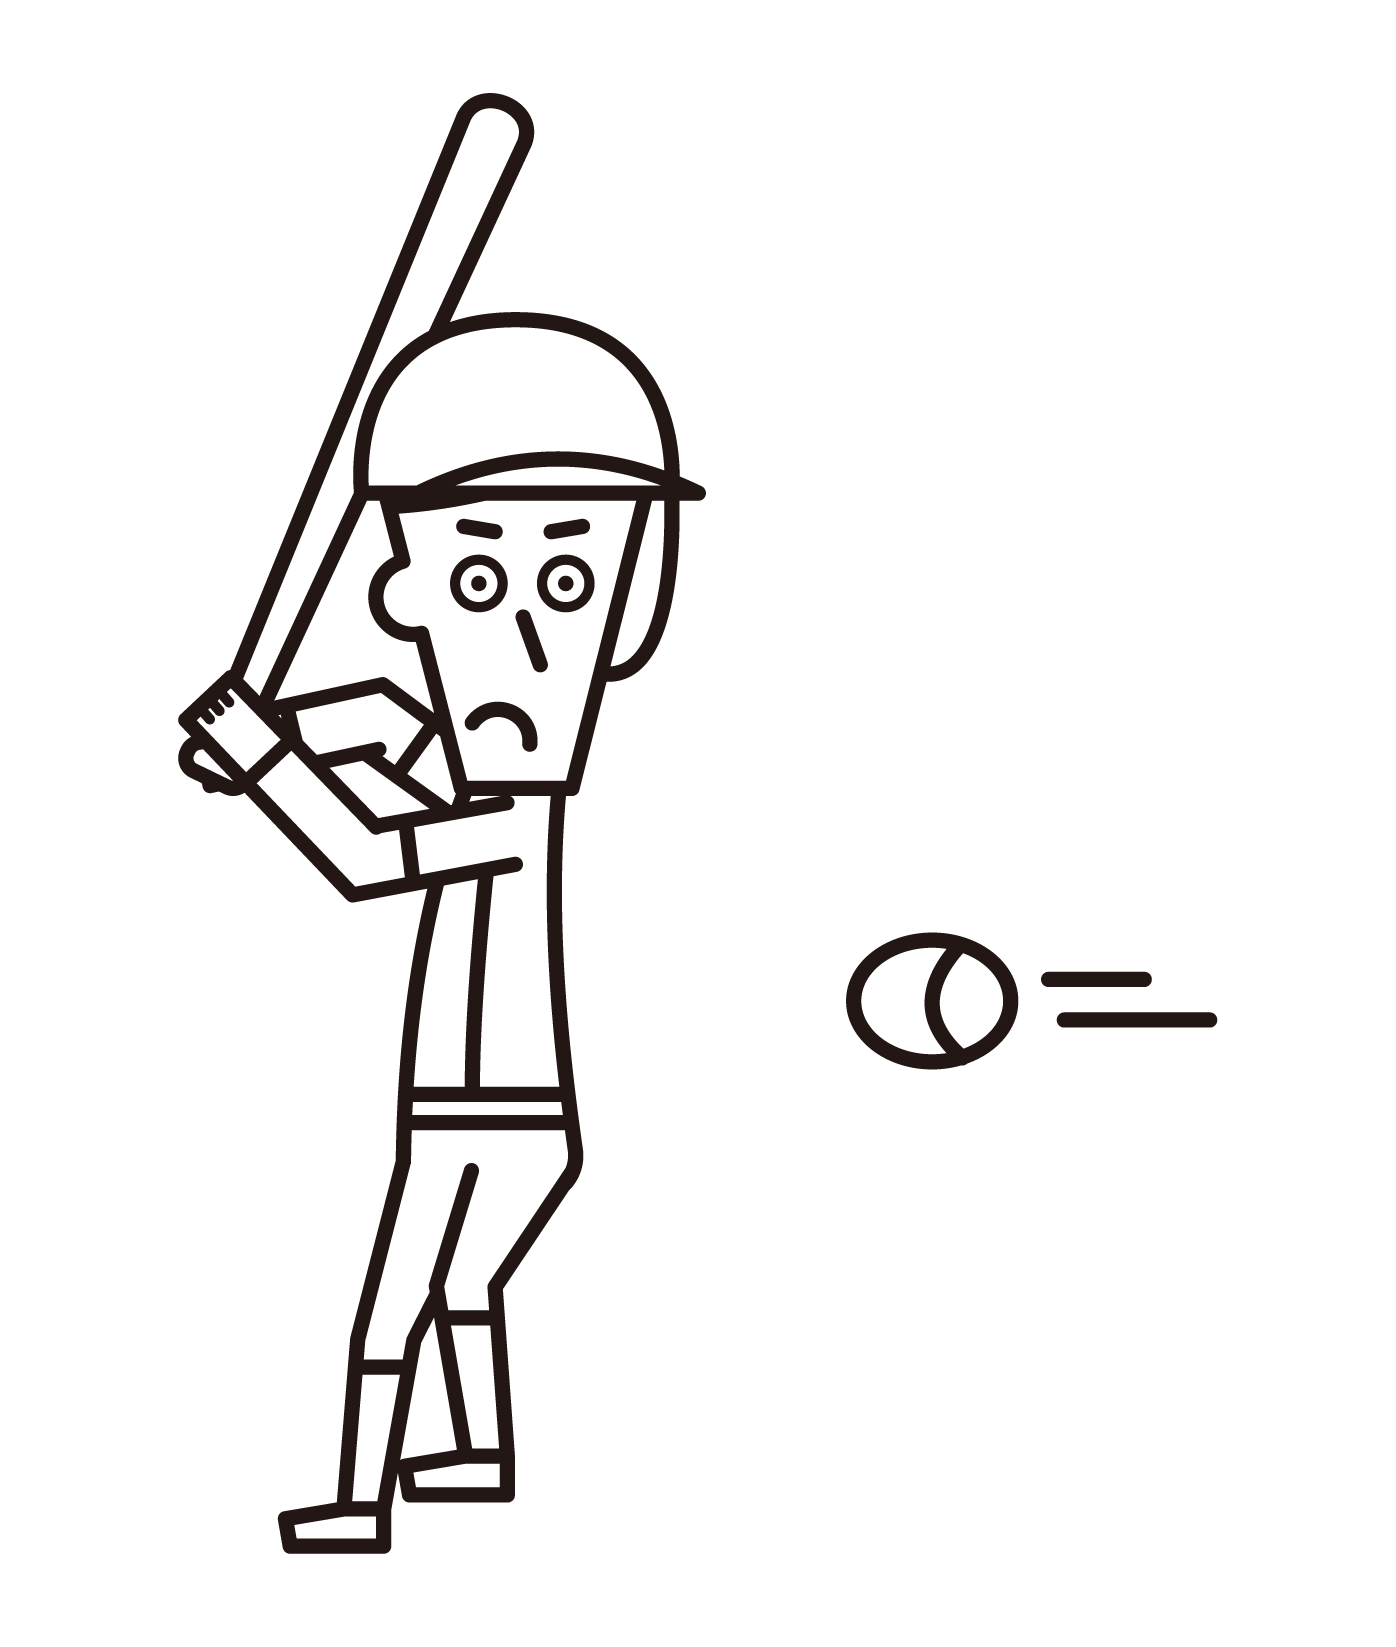 Illustration of a baseball player (male) hitting a ball